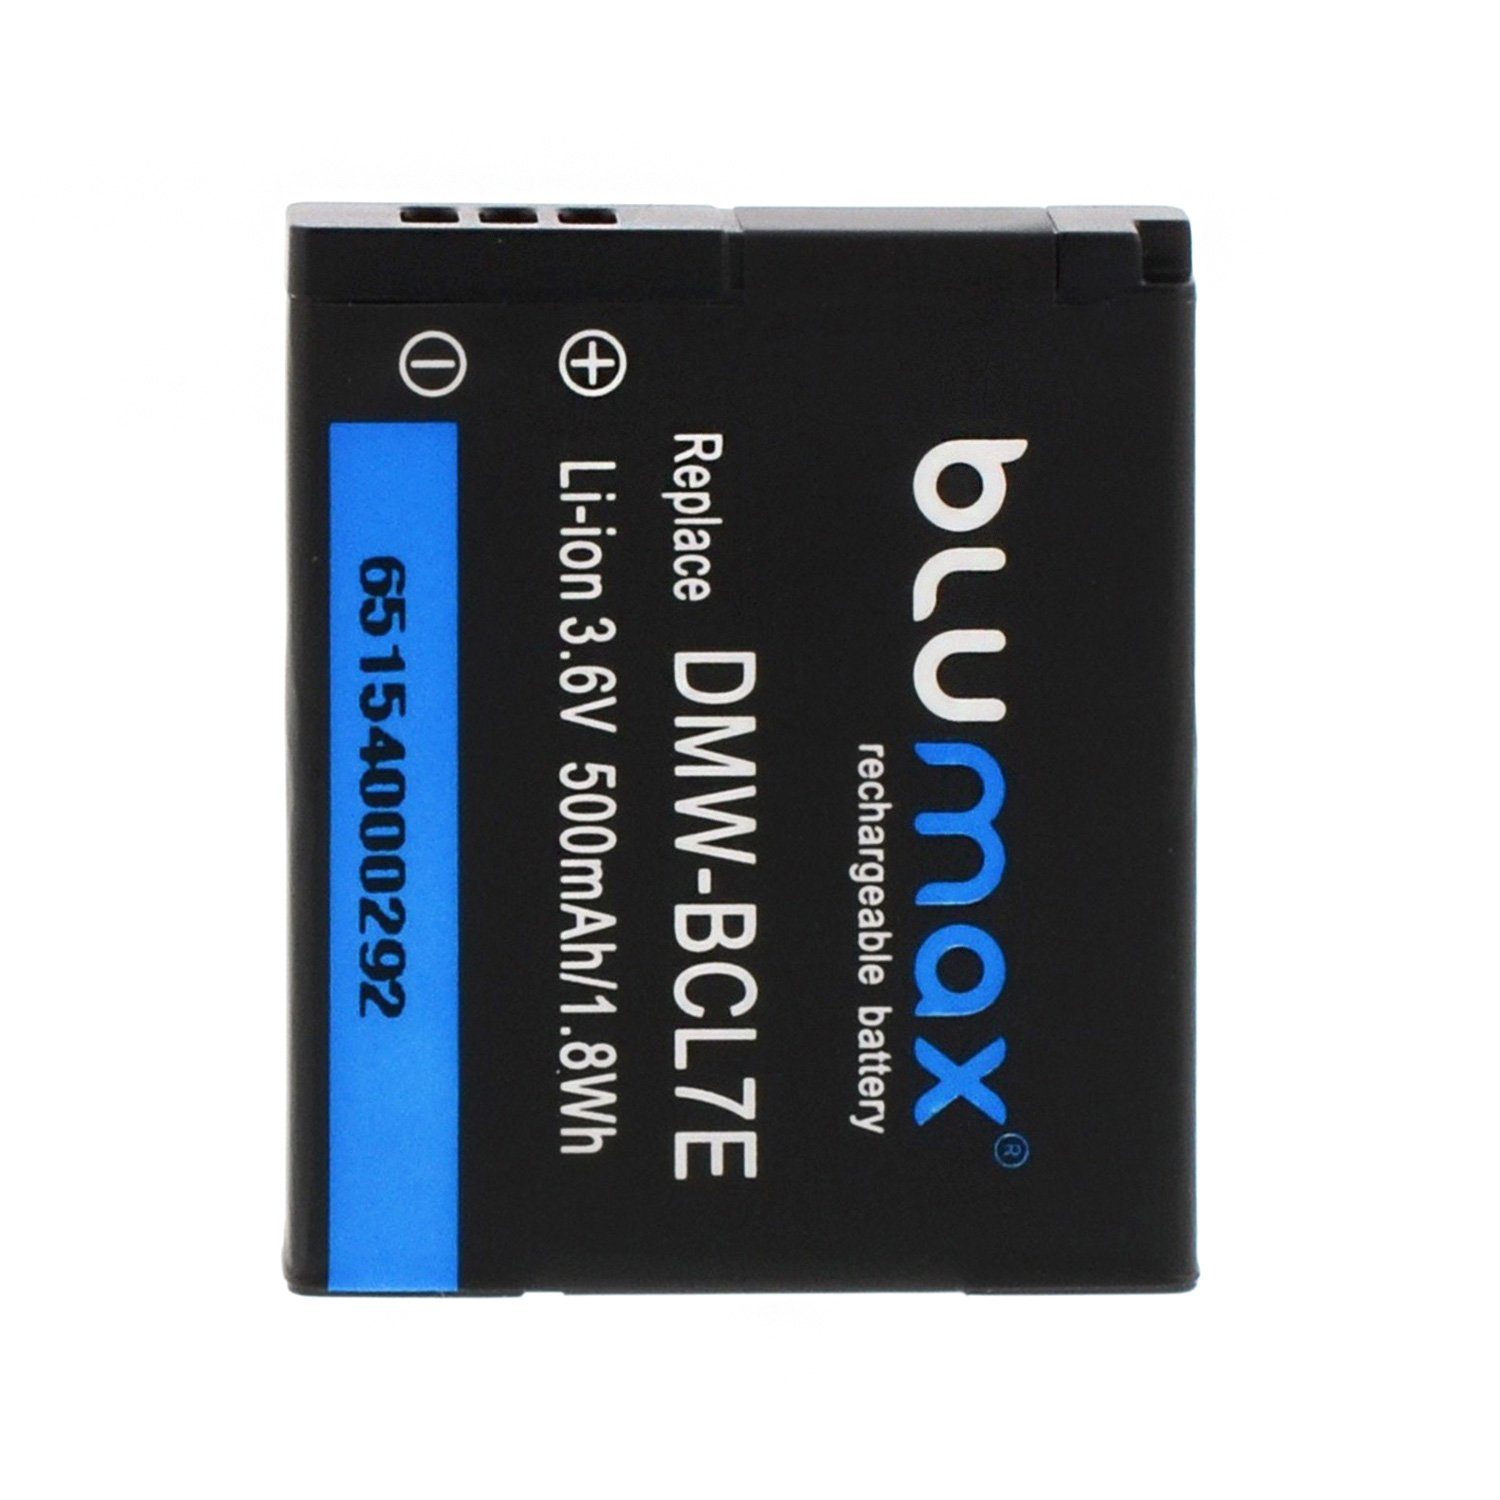 DMW-BCL7 Kamera-Akku Blumax (3,6V) passend Akku Panasonic mAh 500 für